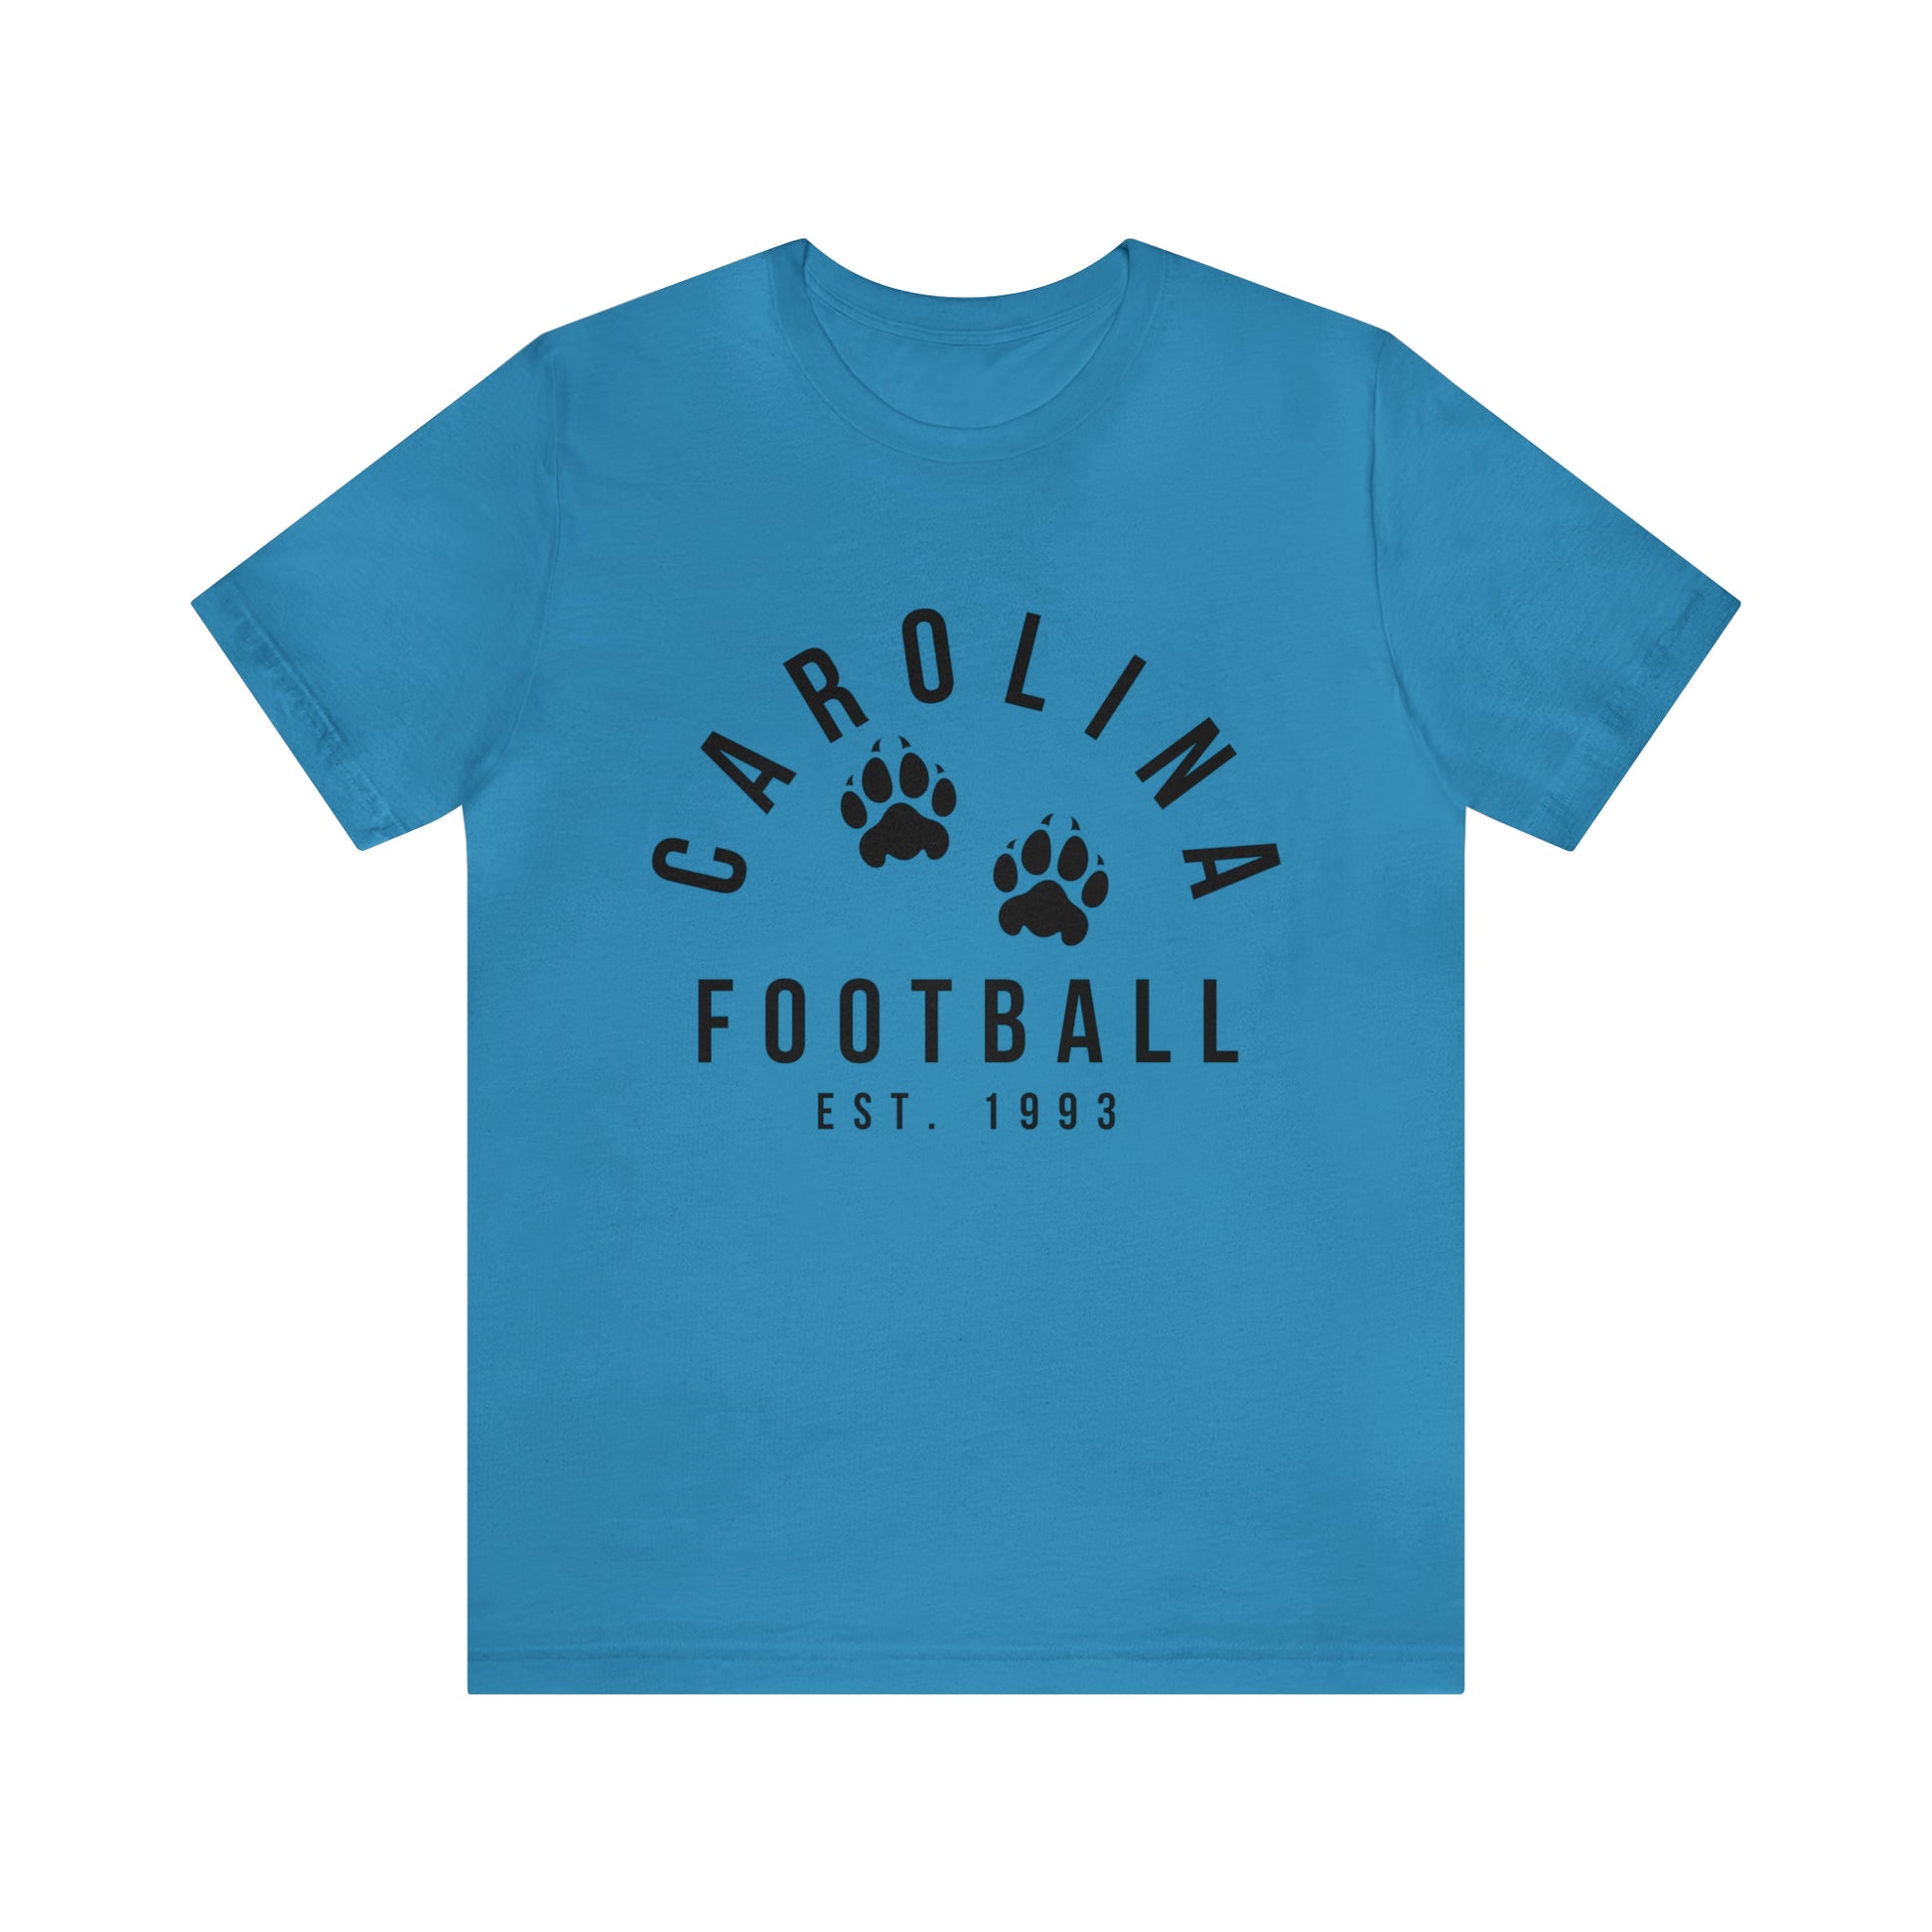 Vintage Carolina Panthers T-Shirt - Retro Short Sleeve Tee NFL Football Oversized Apparel - Vintage Men's and Women's - Design 4 Blue